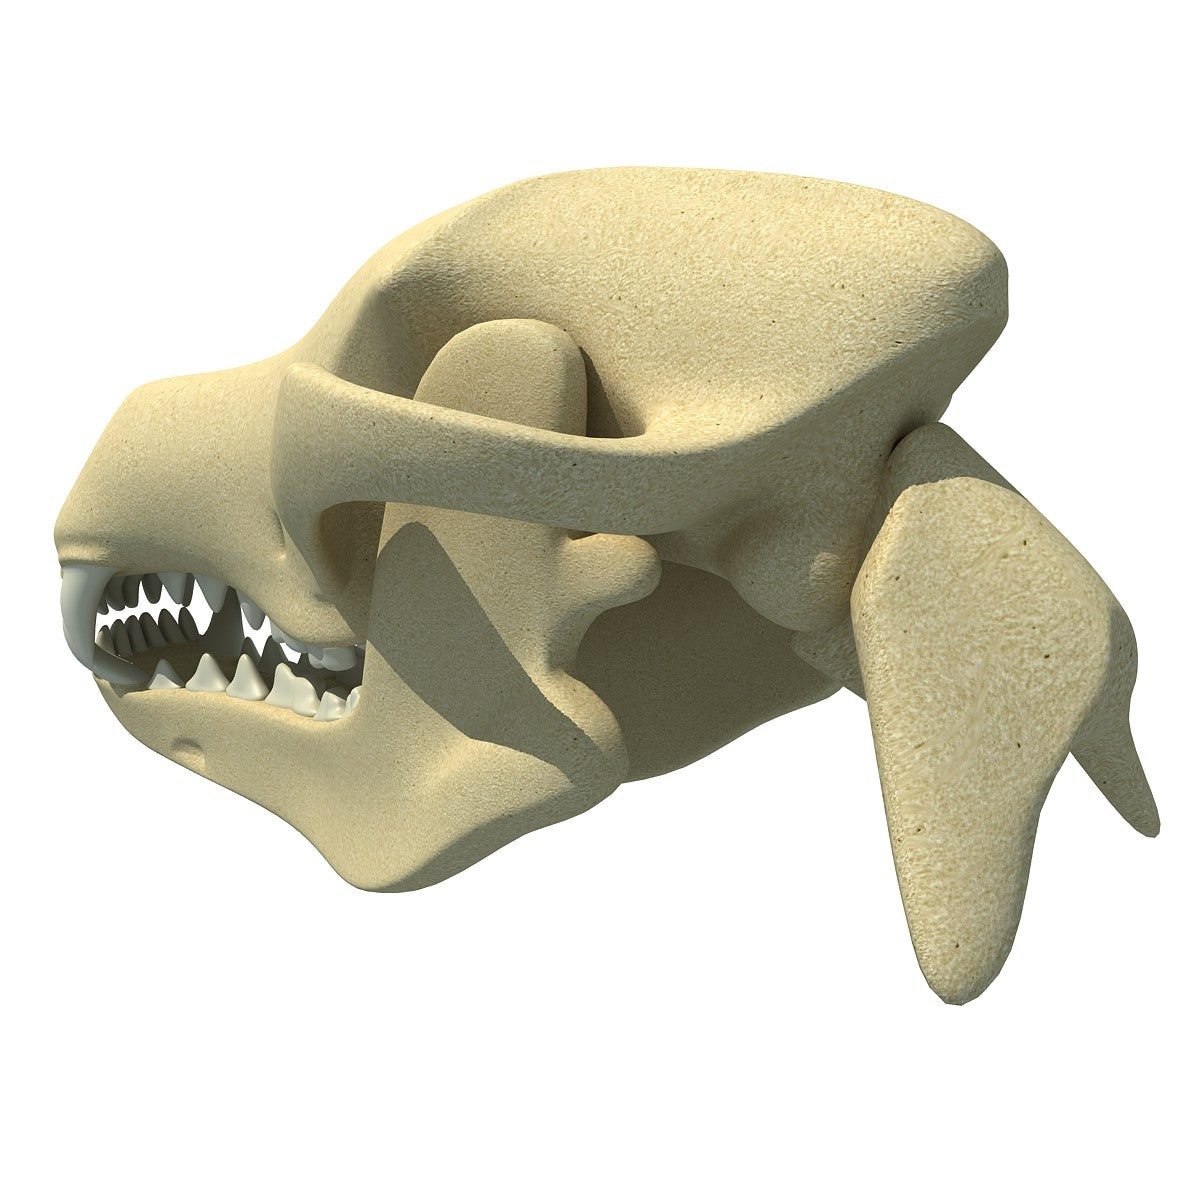 Dog Skeleton 3D Model – 3D Horse